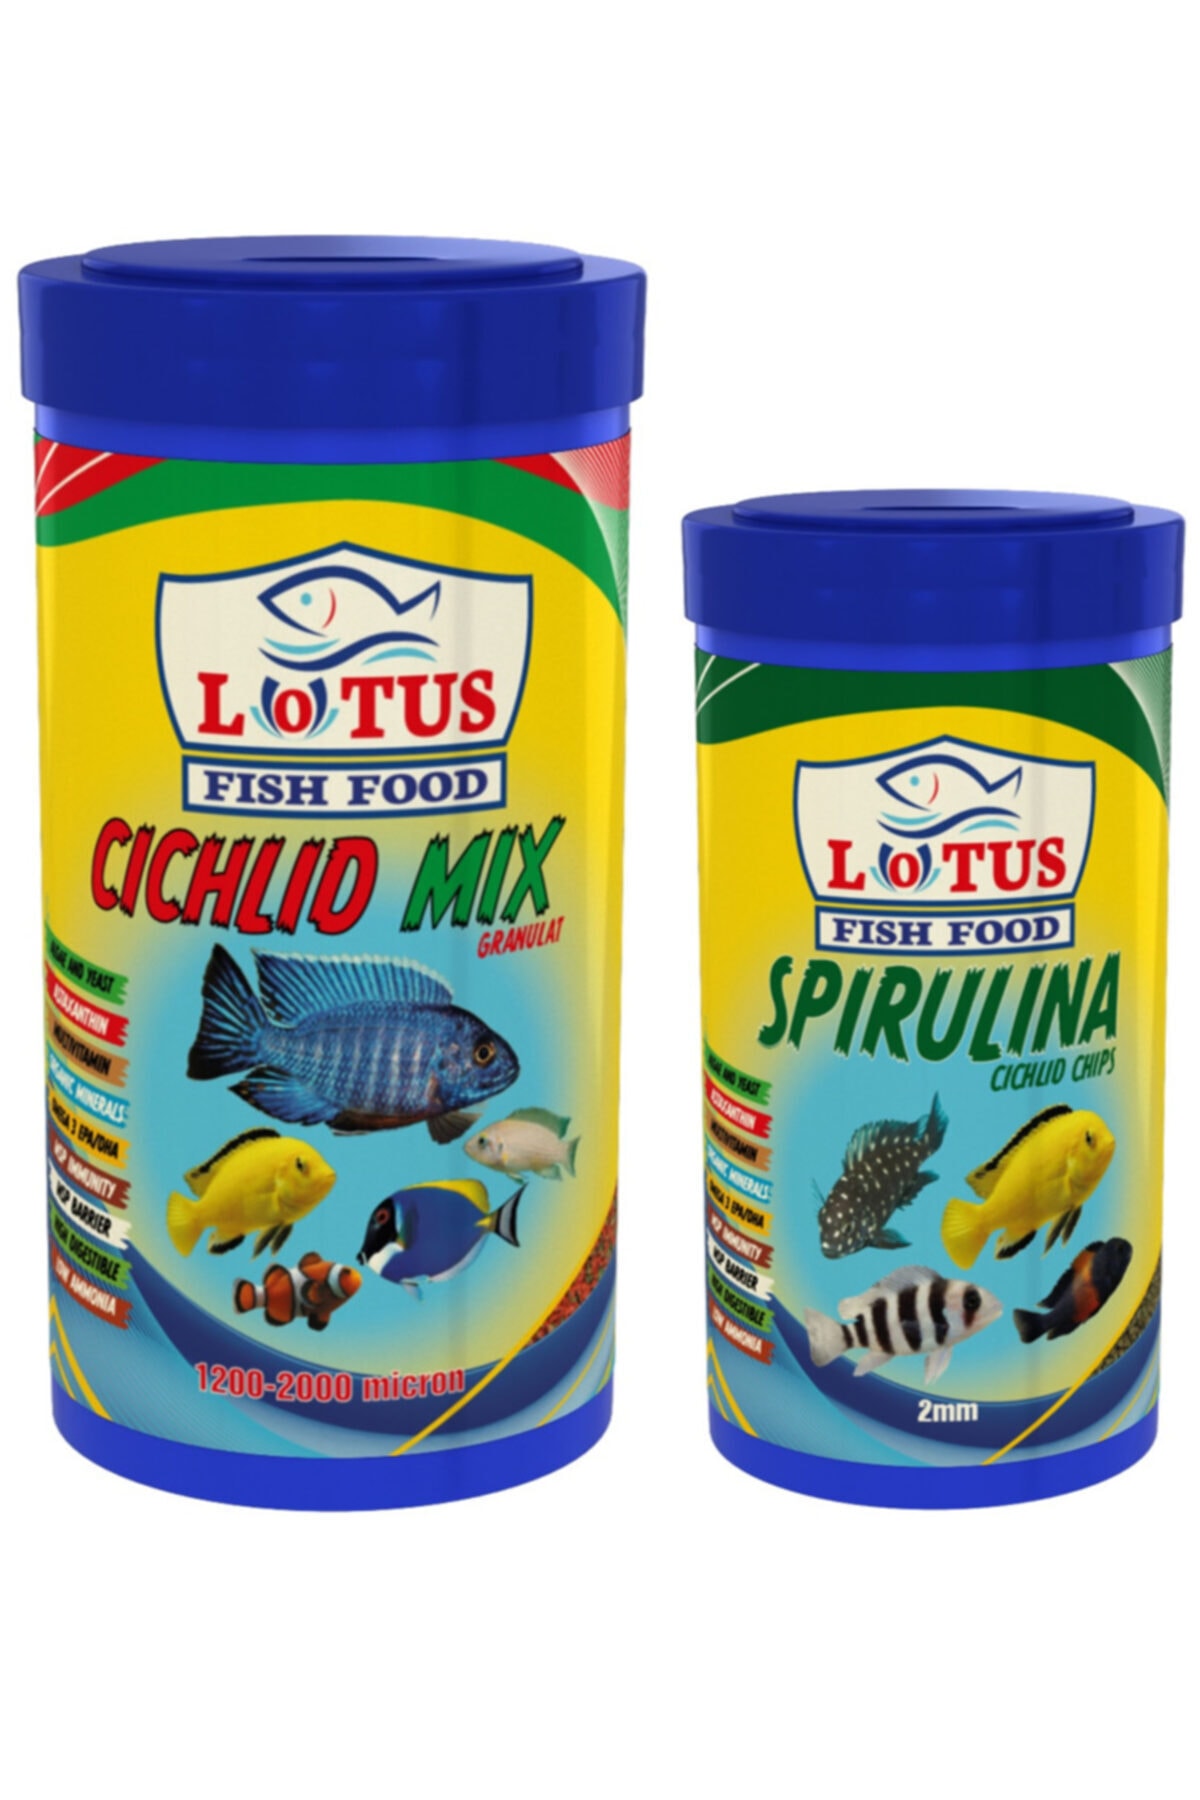 Lotus Cichlid Mix Granulat 1000 Ml Ve Spirulina Cichlid Chips 250 Ml Balık Yemi